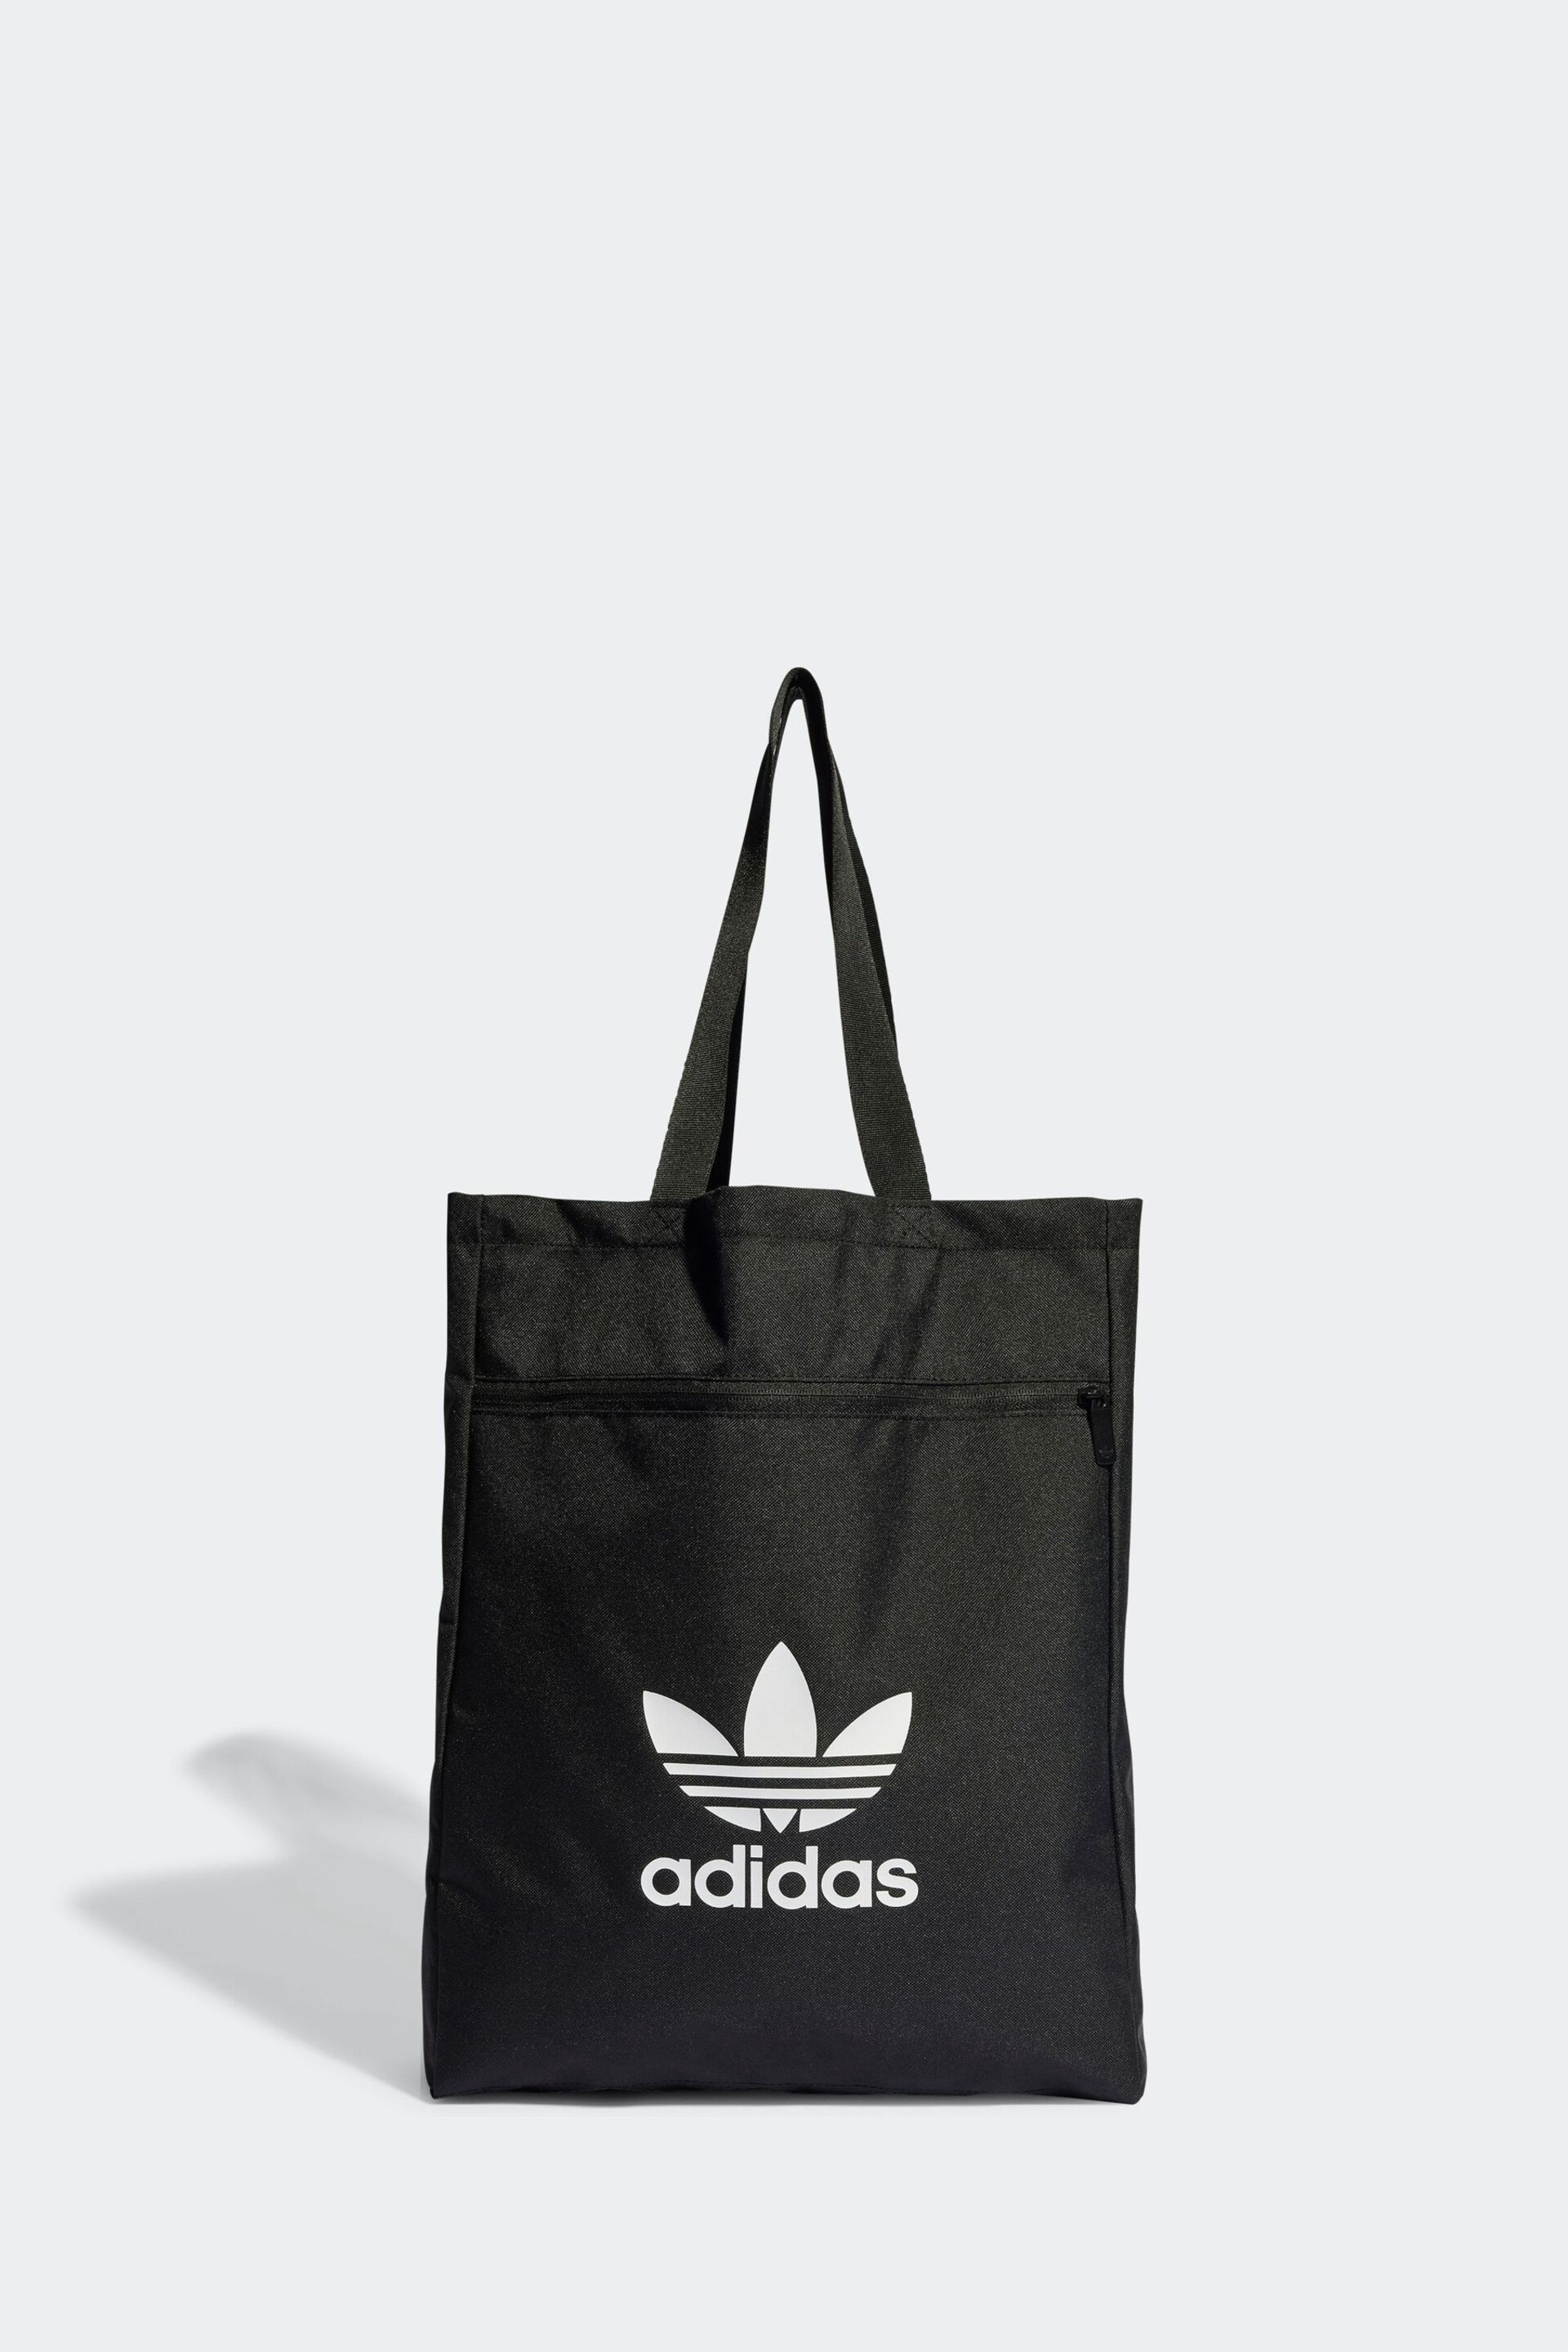 adidas Originals Adicolor Classic Shopper Black Bag - Image 2 of 6